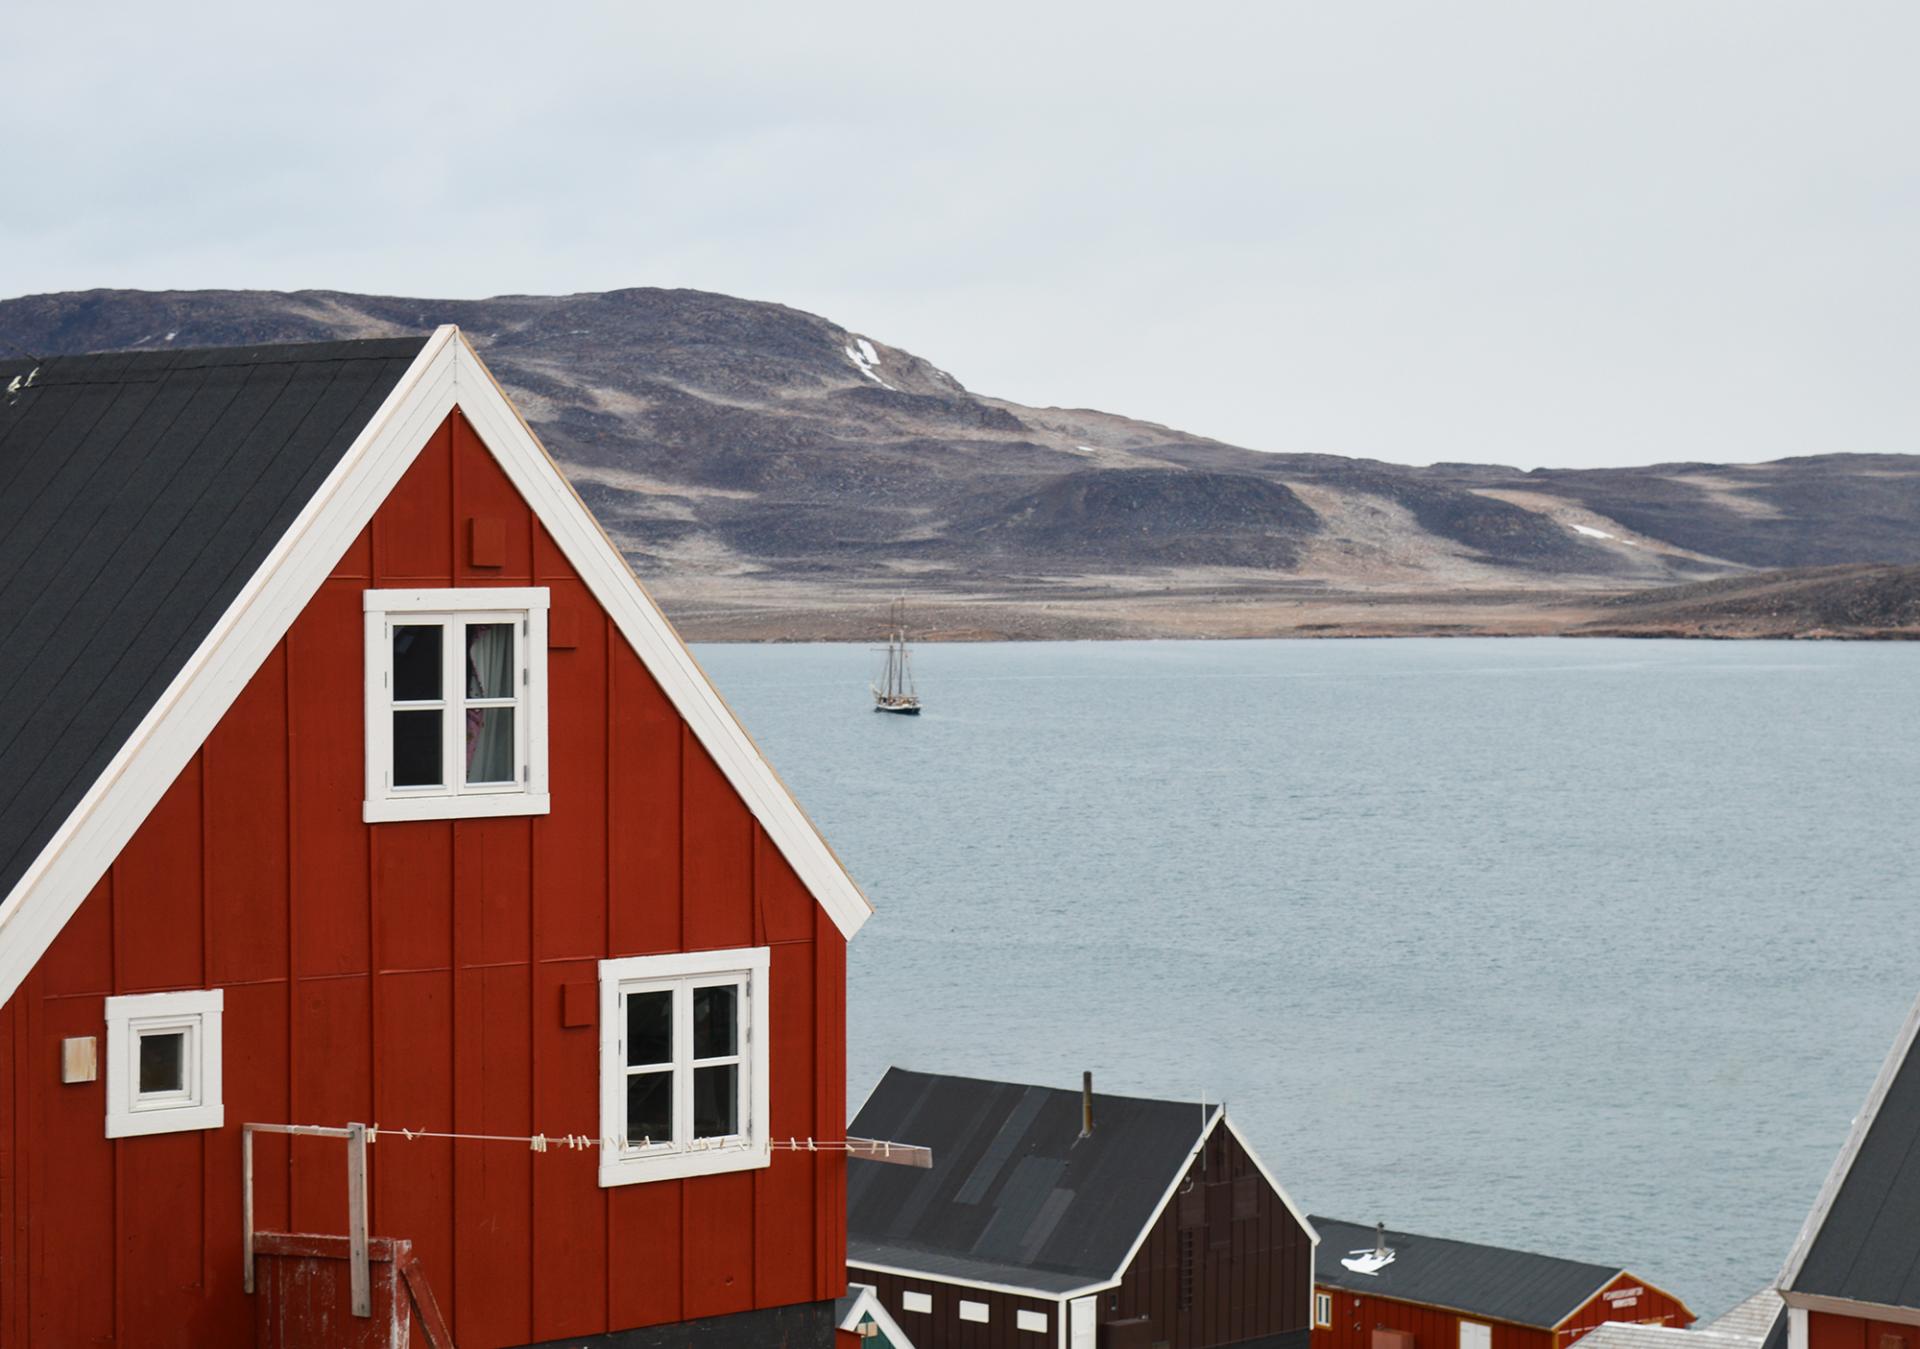 Greenland travel blog - an Arctic adventure in Greenland